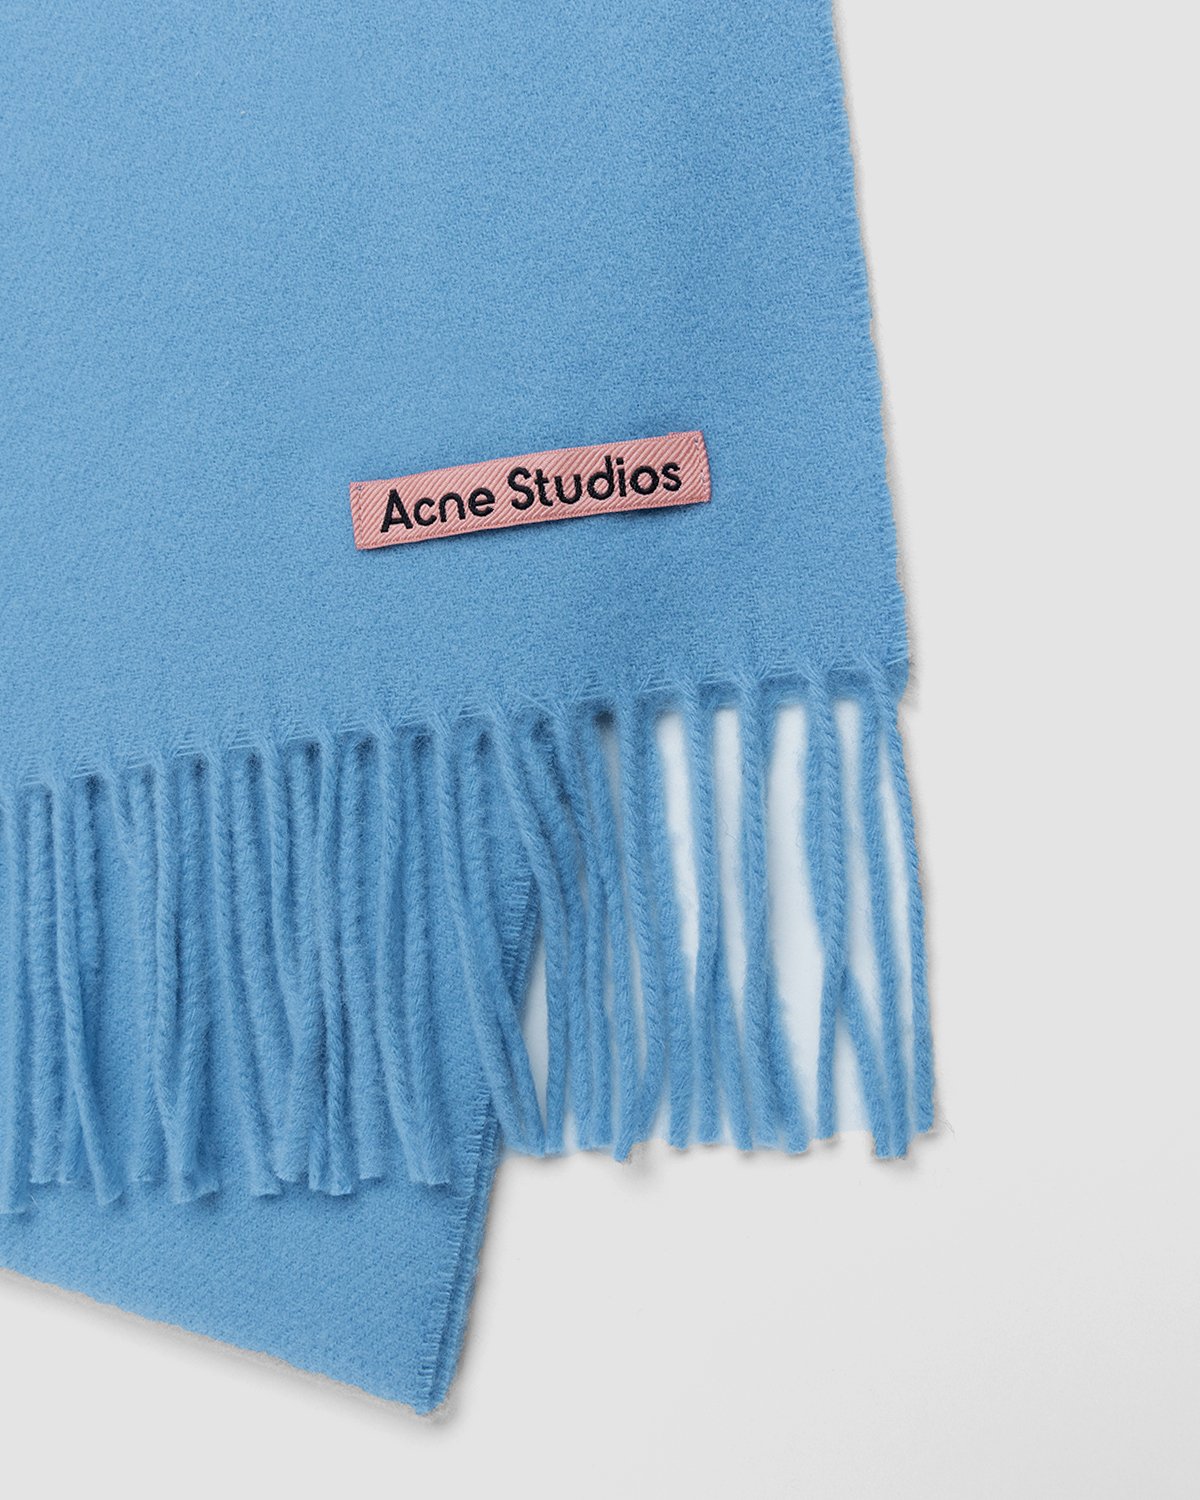 Acne Studios - Canada Skinny Scarf Azure Blue - Accessories - Blue - Image 3